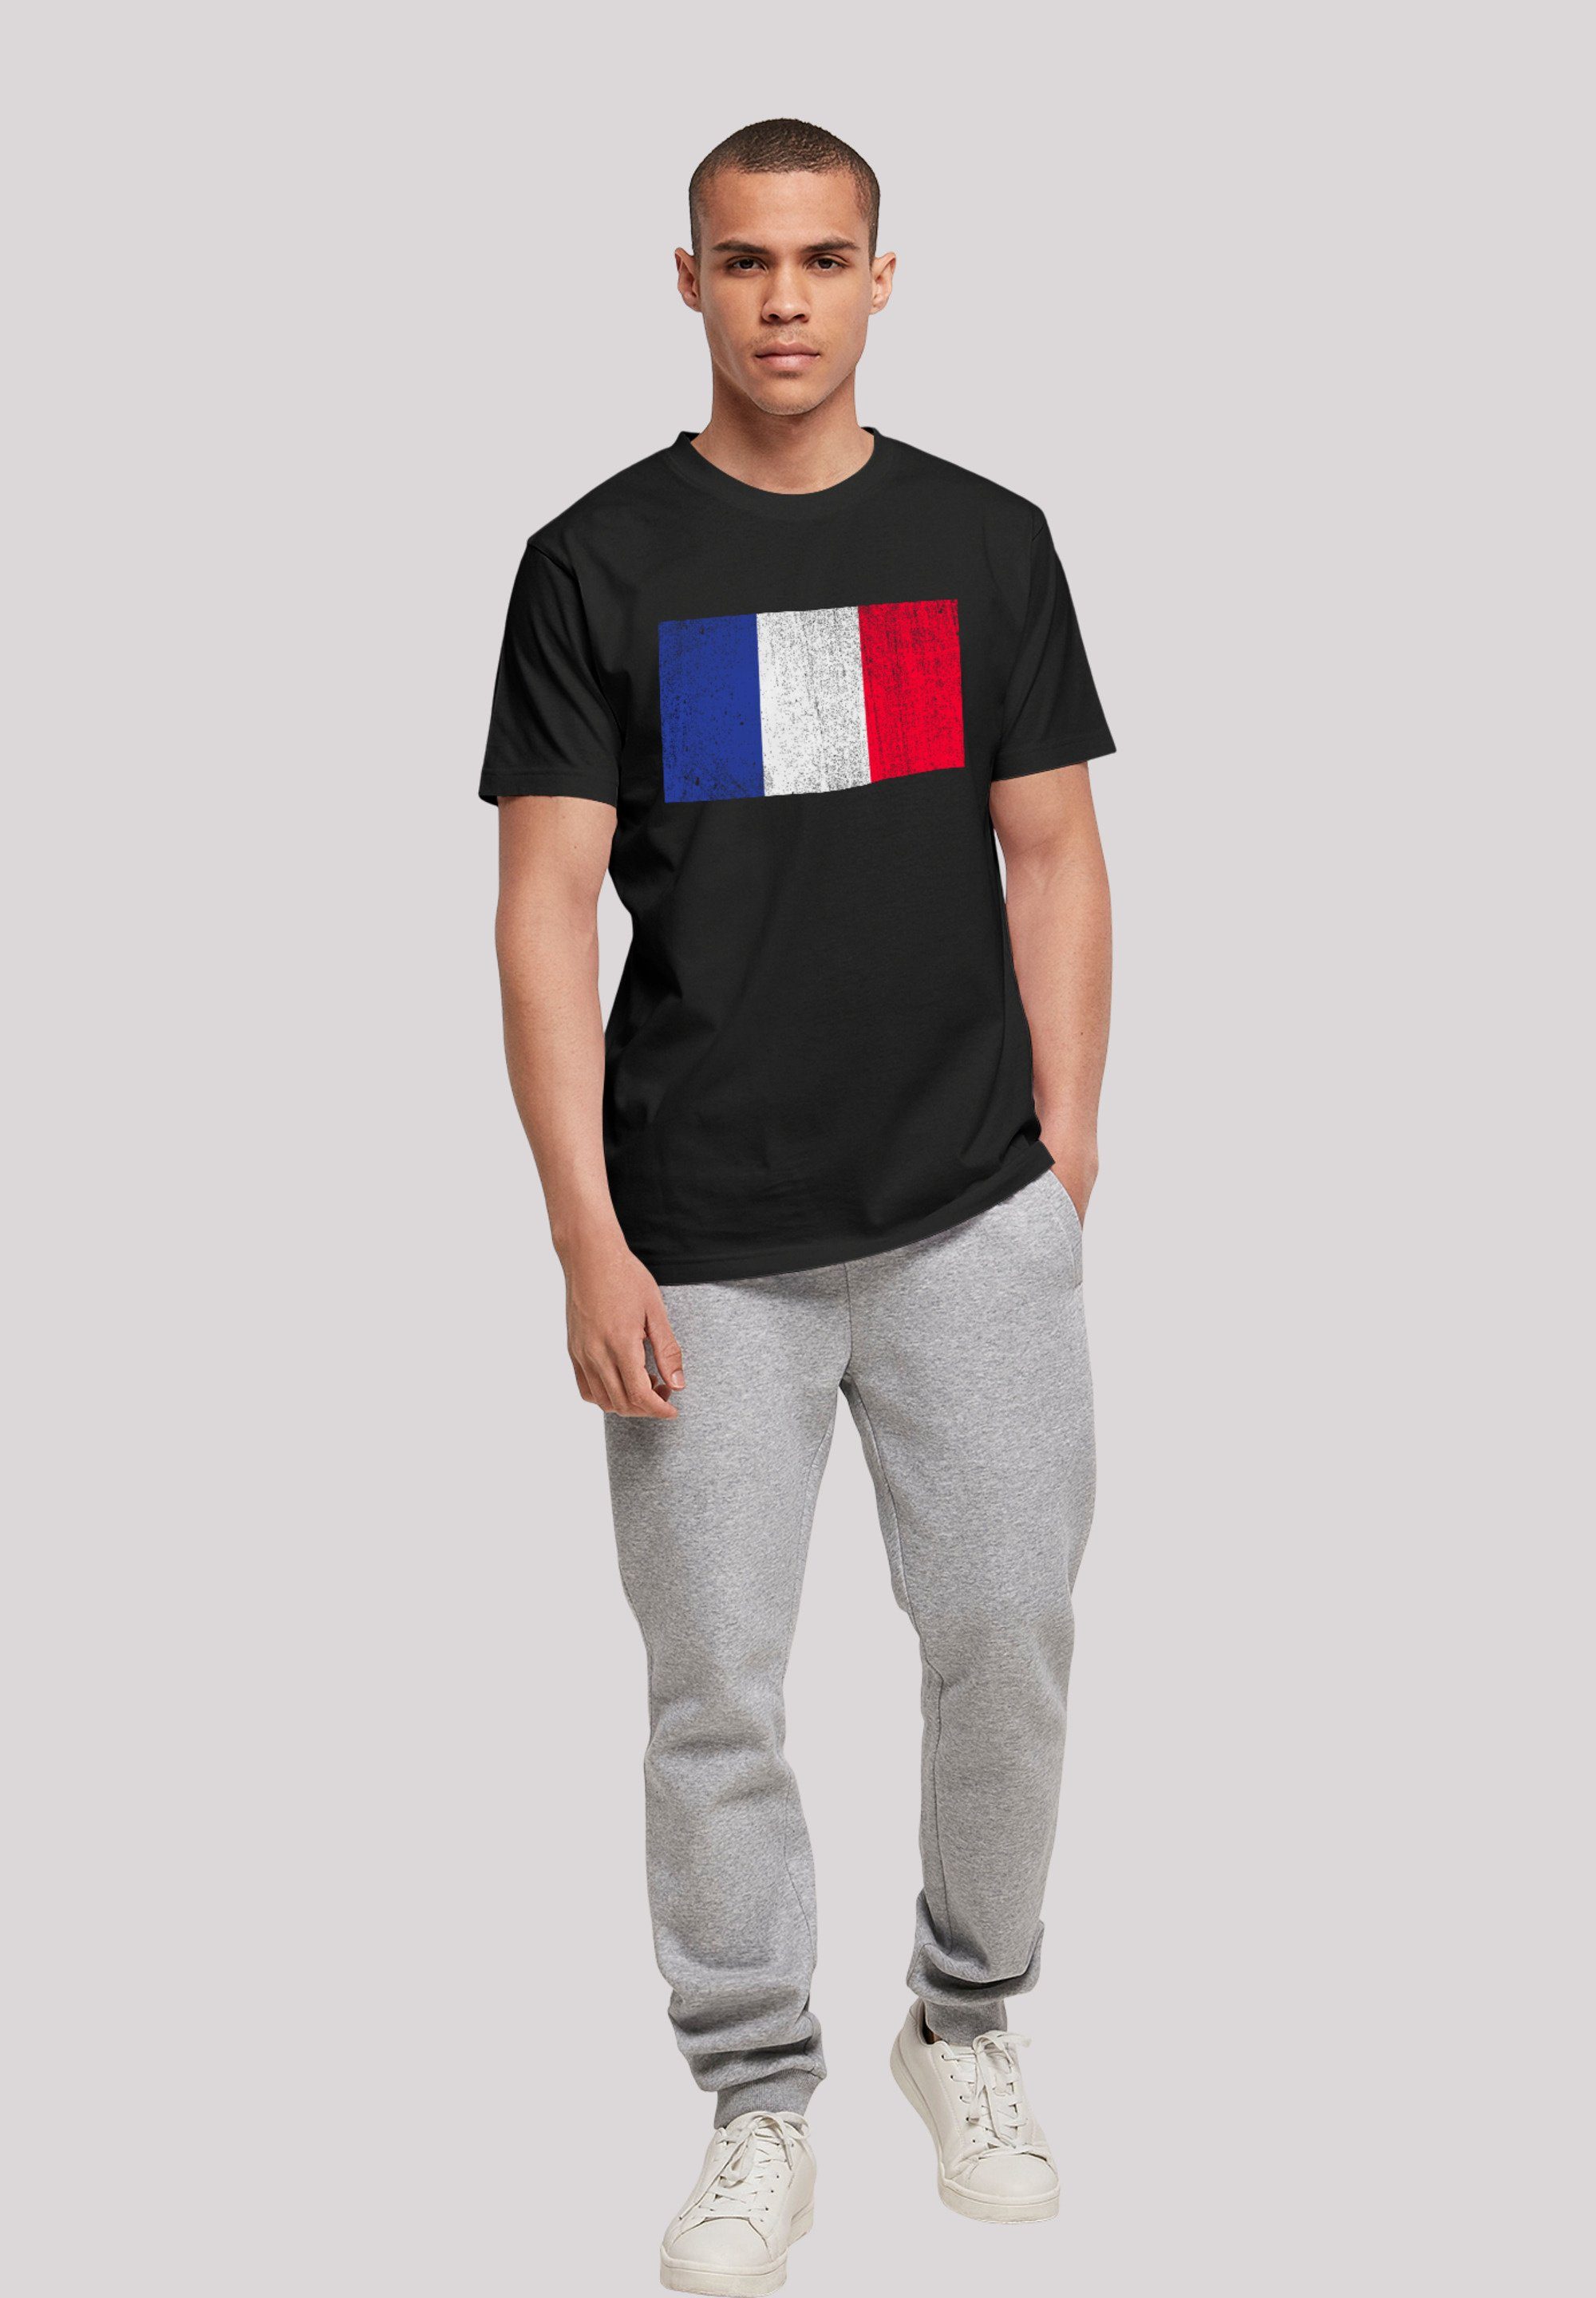 F4NT4STIC T-Shirt Frankreich France Print distressed Flagge schwarz